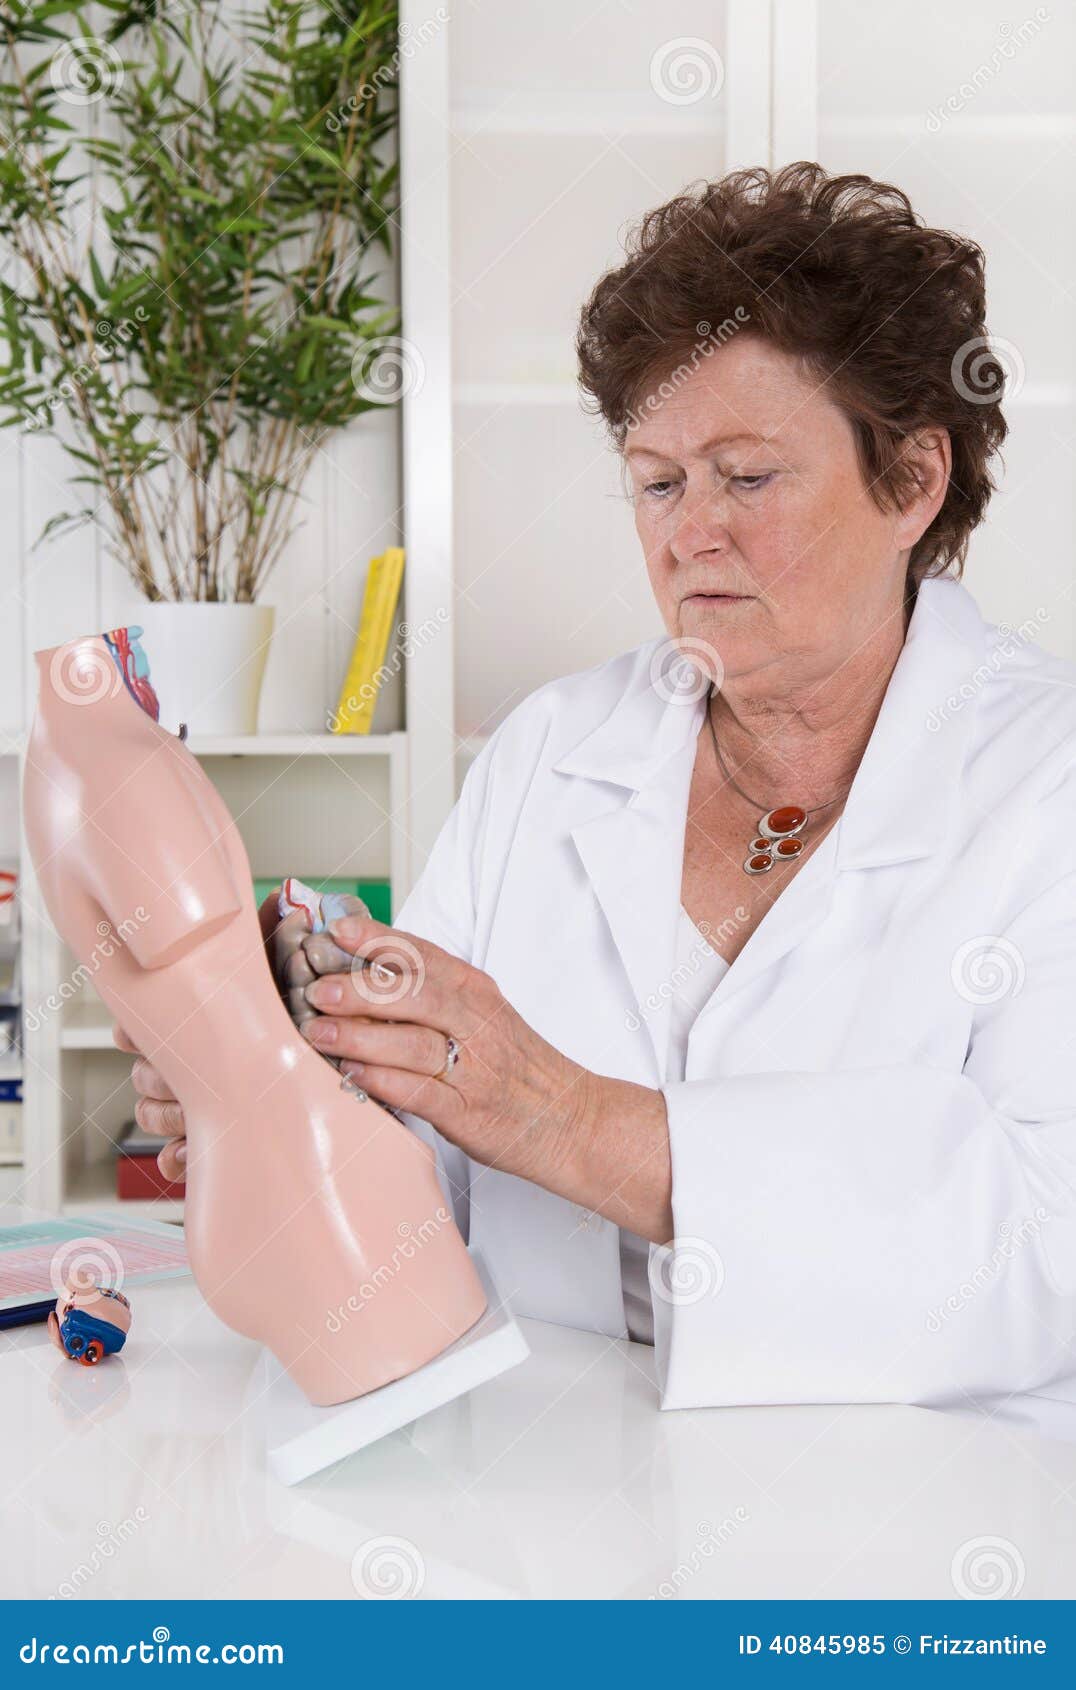 senior female doctor demonstrate and explain the human body.